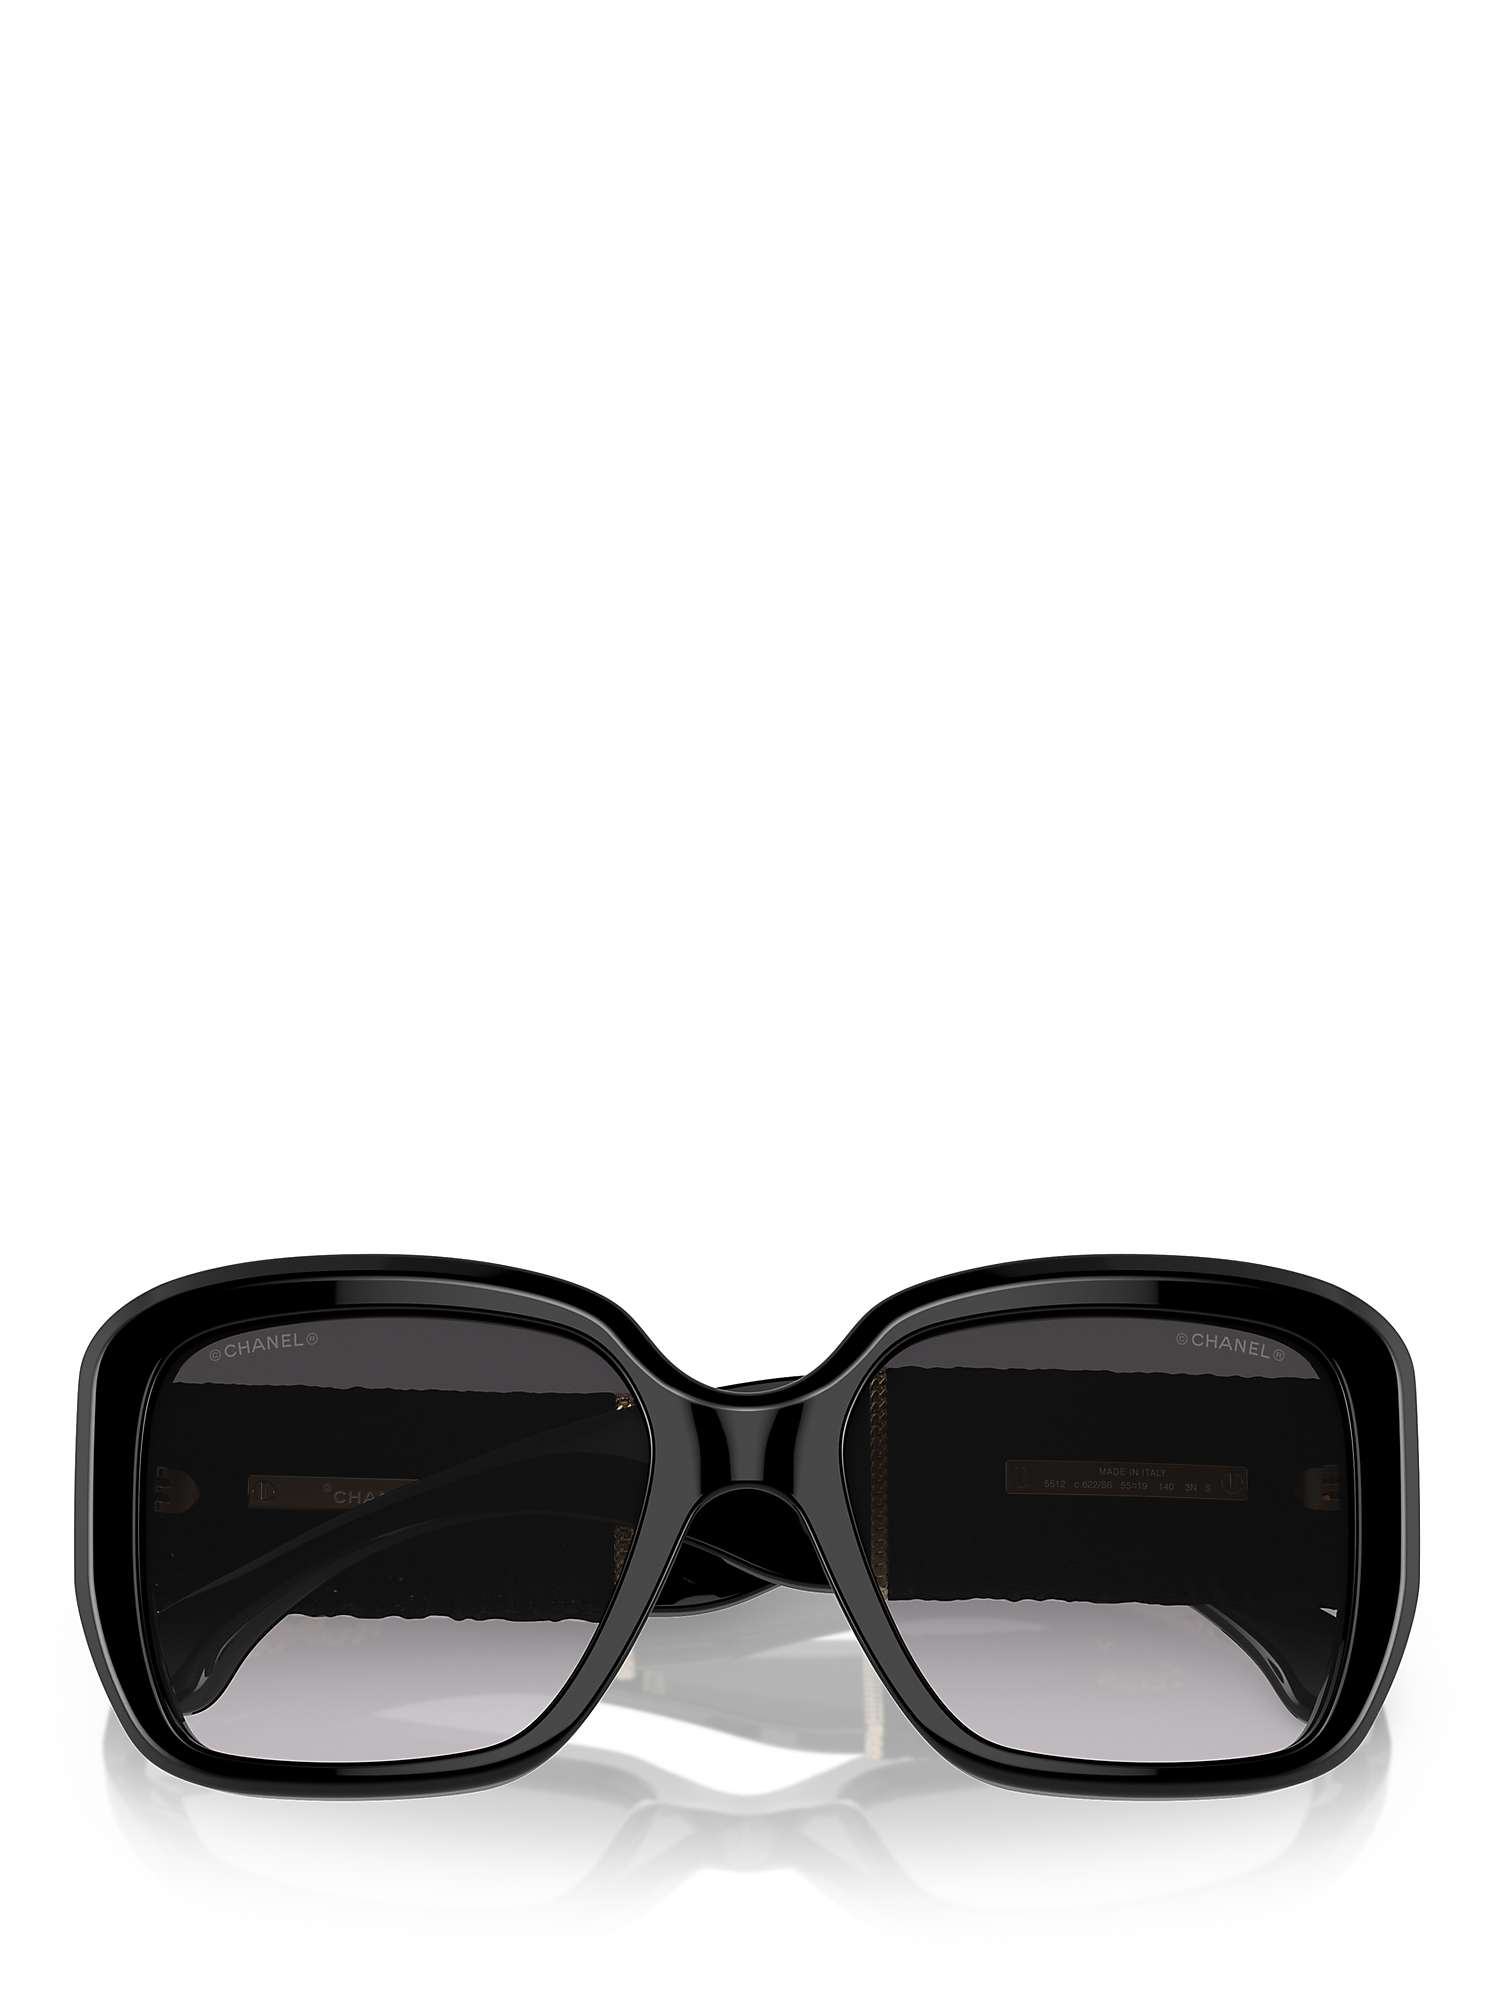 Buy CHANEL Square Sunglasses CH5512 Black/Lilac Gradient Online at johnlewis.com